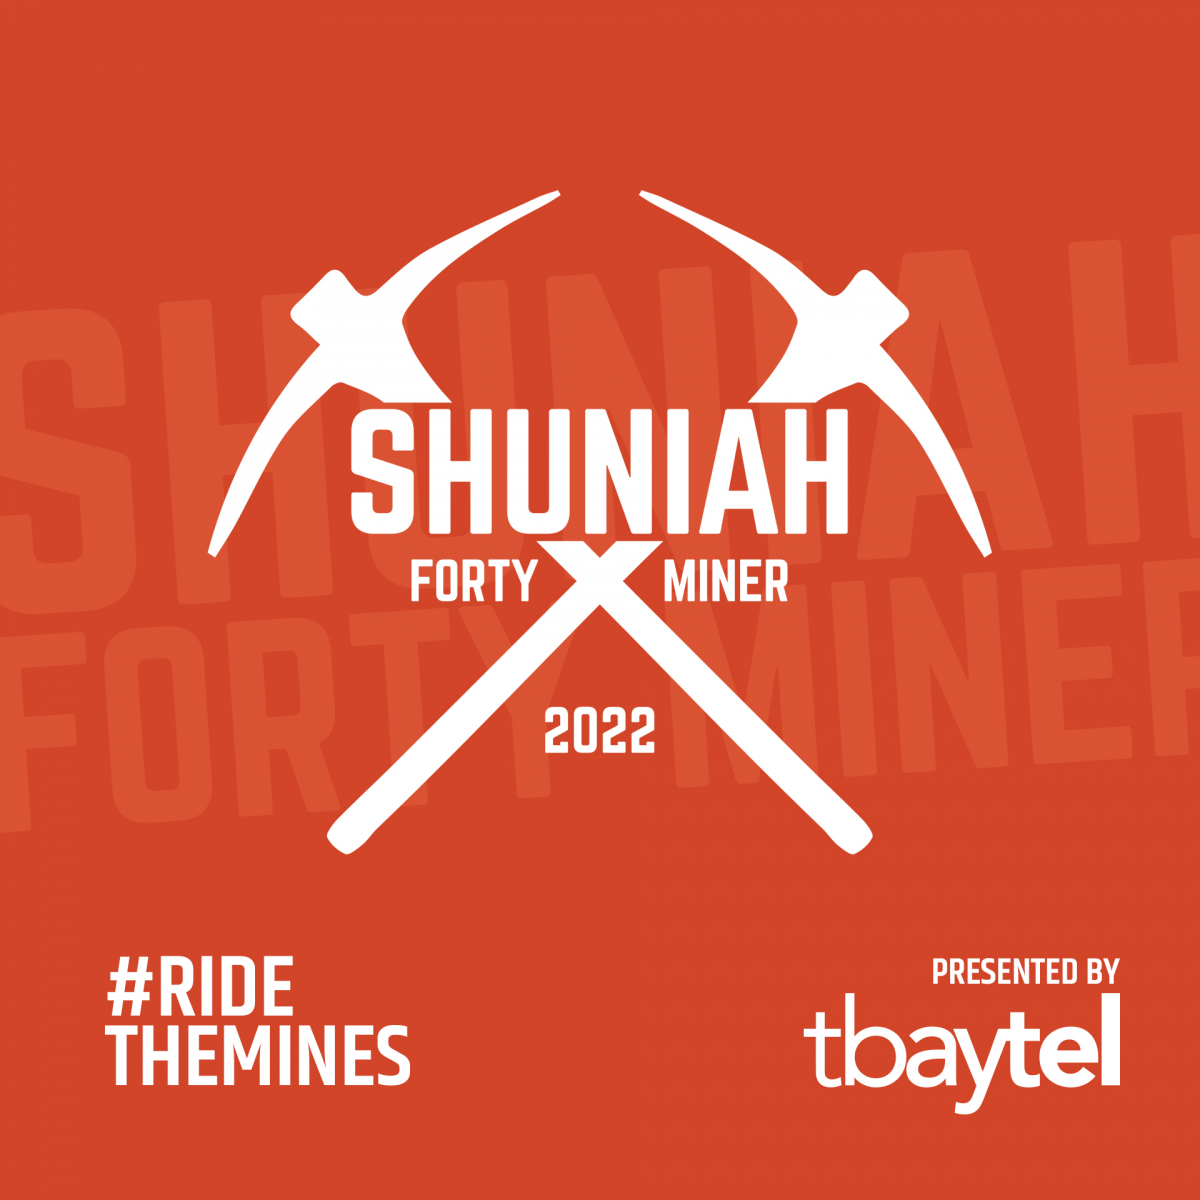 Shuniah Forty Miner Presented by Tbaytel